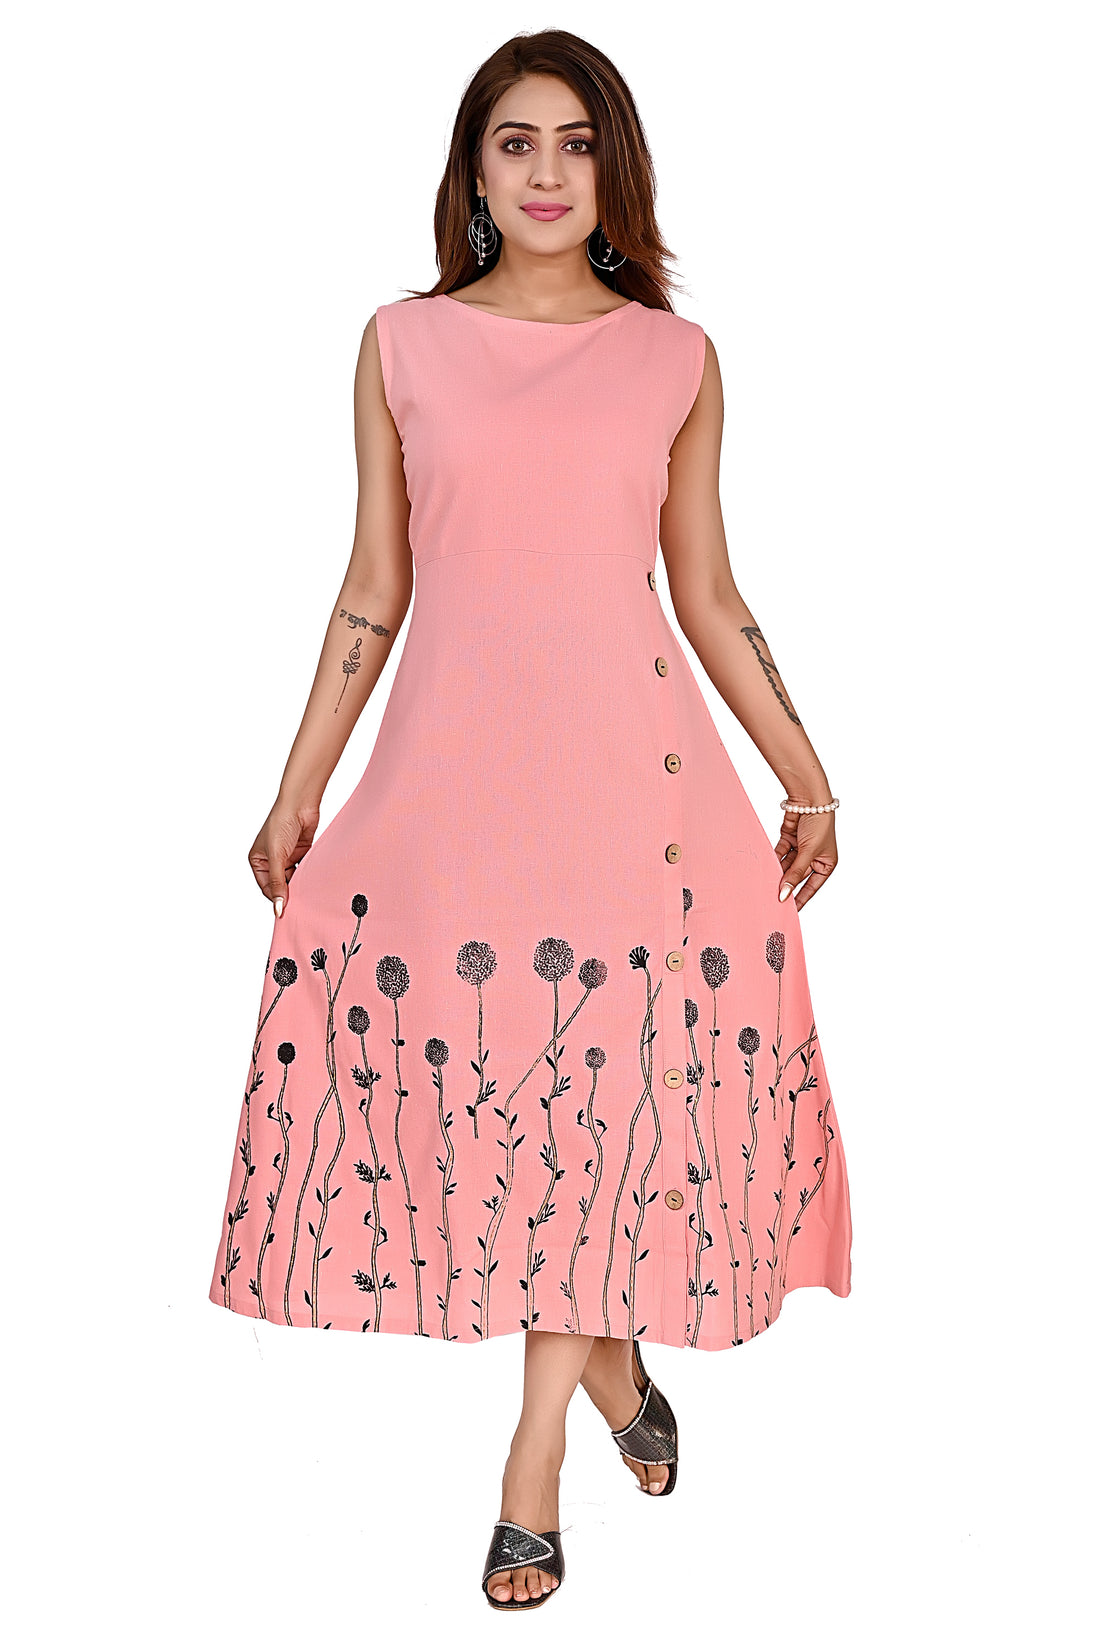 Nirmal online Premium cotton tunic Dress for Women in Peach Pink colour